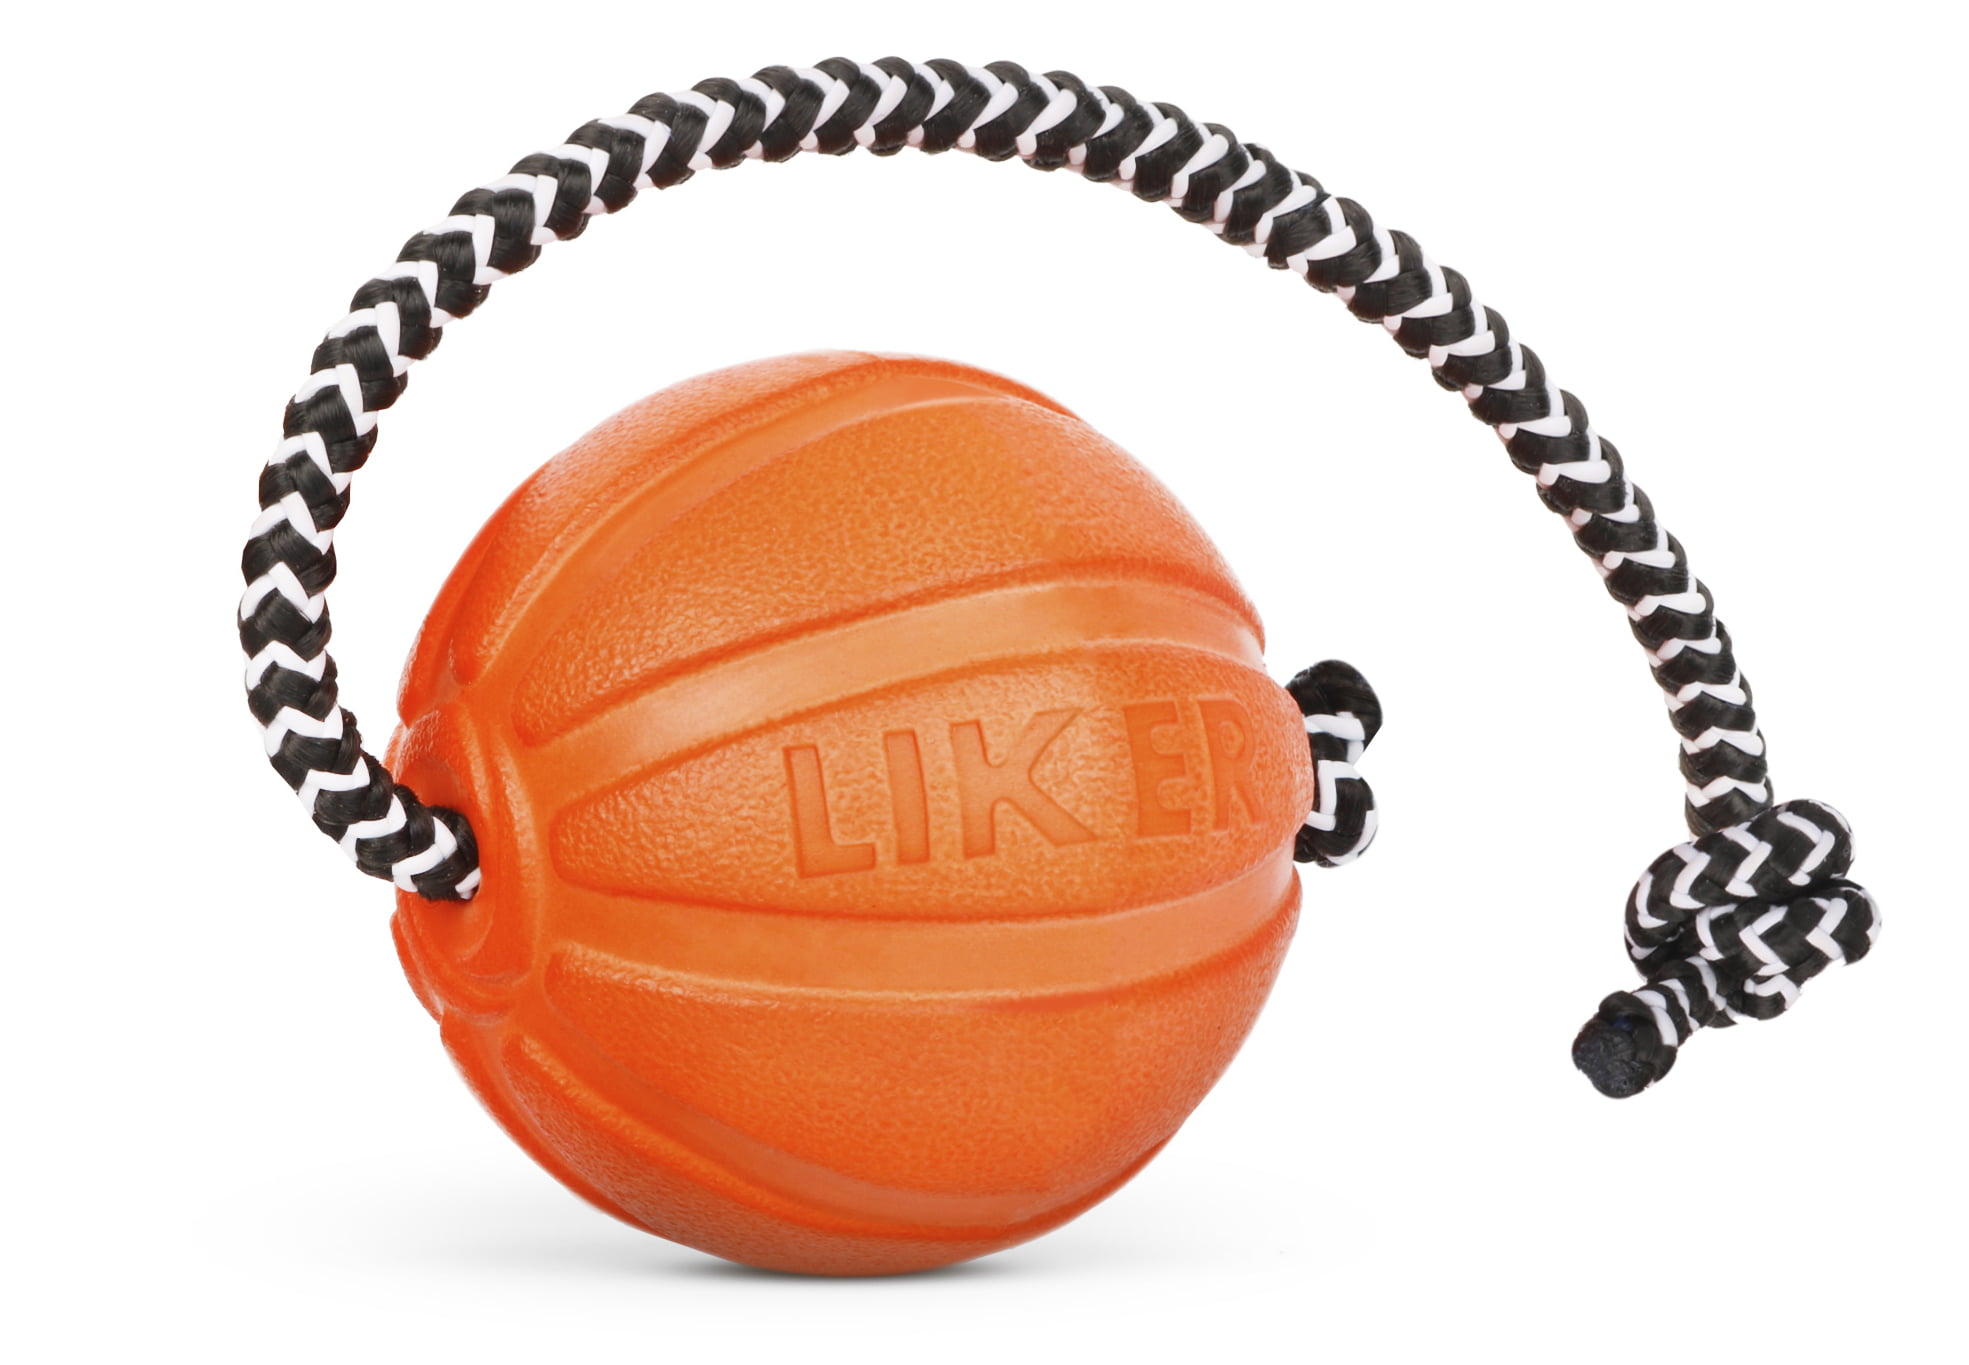 Мячик LIKER Cord 7 со шнуром для собак мелких и средних пород